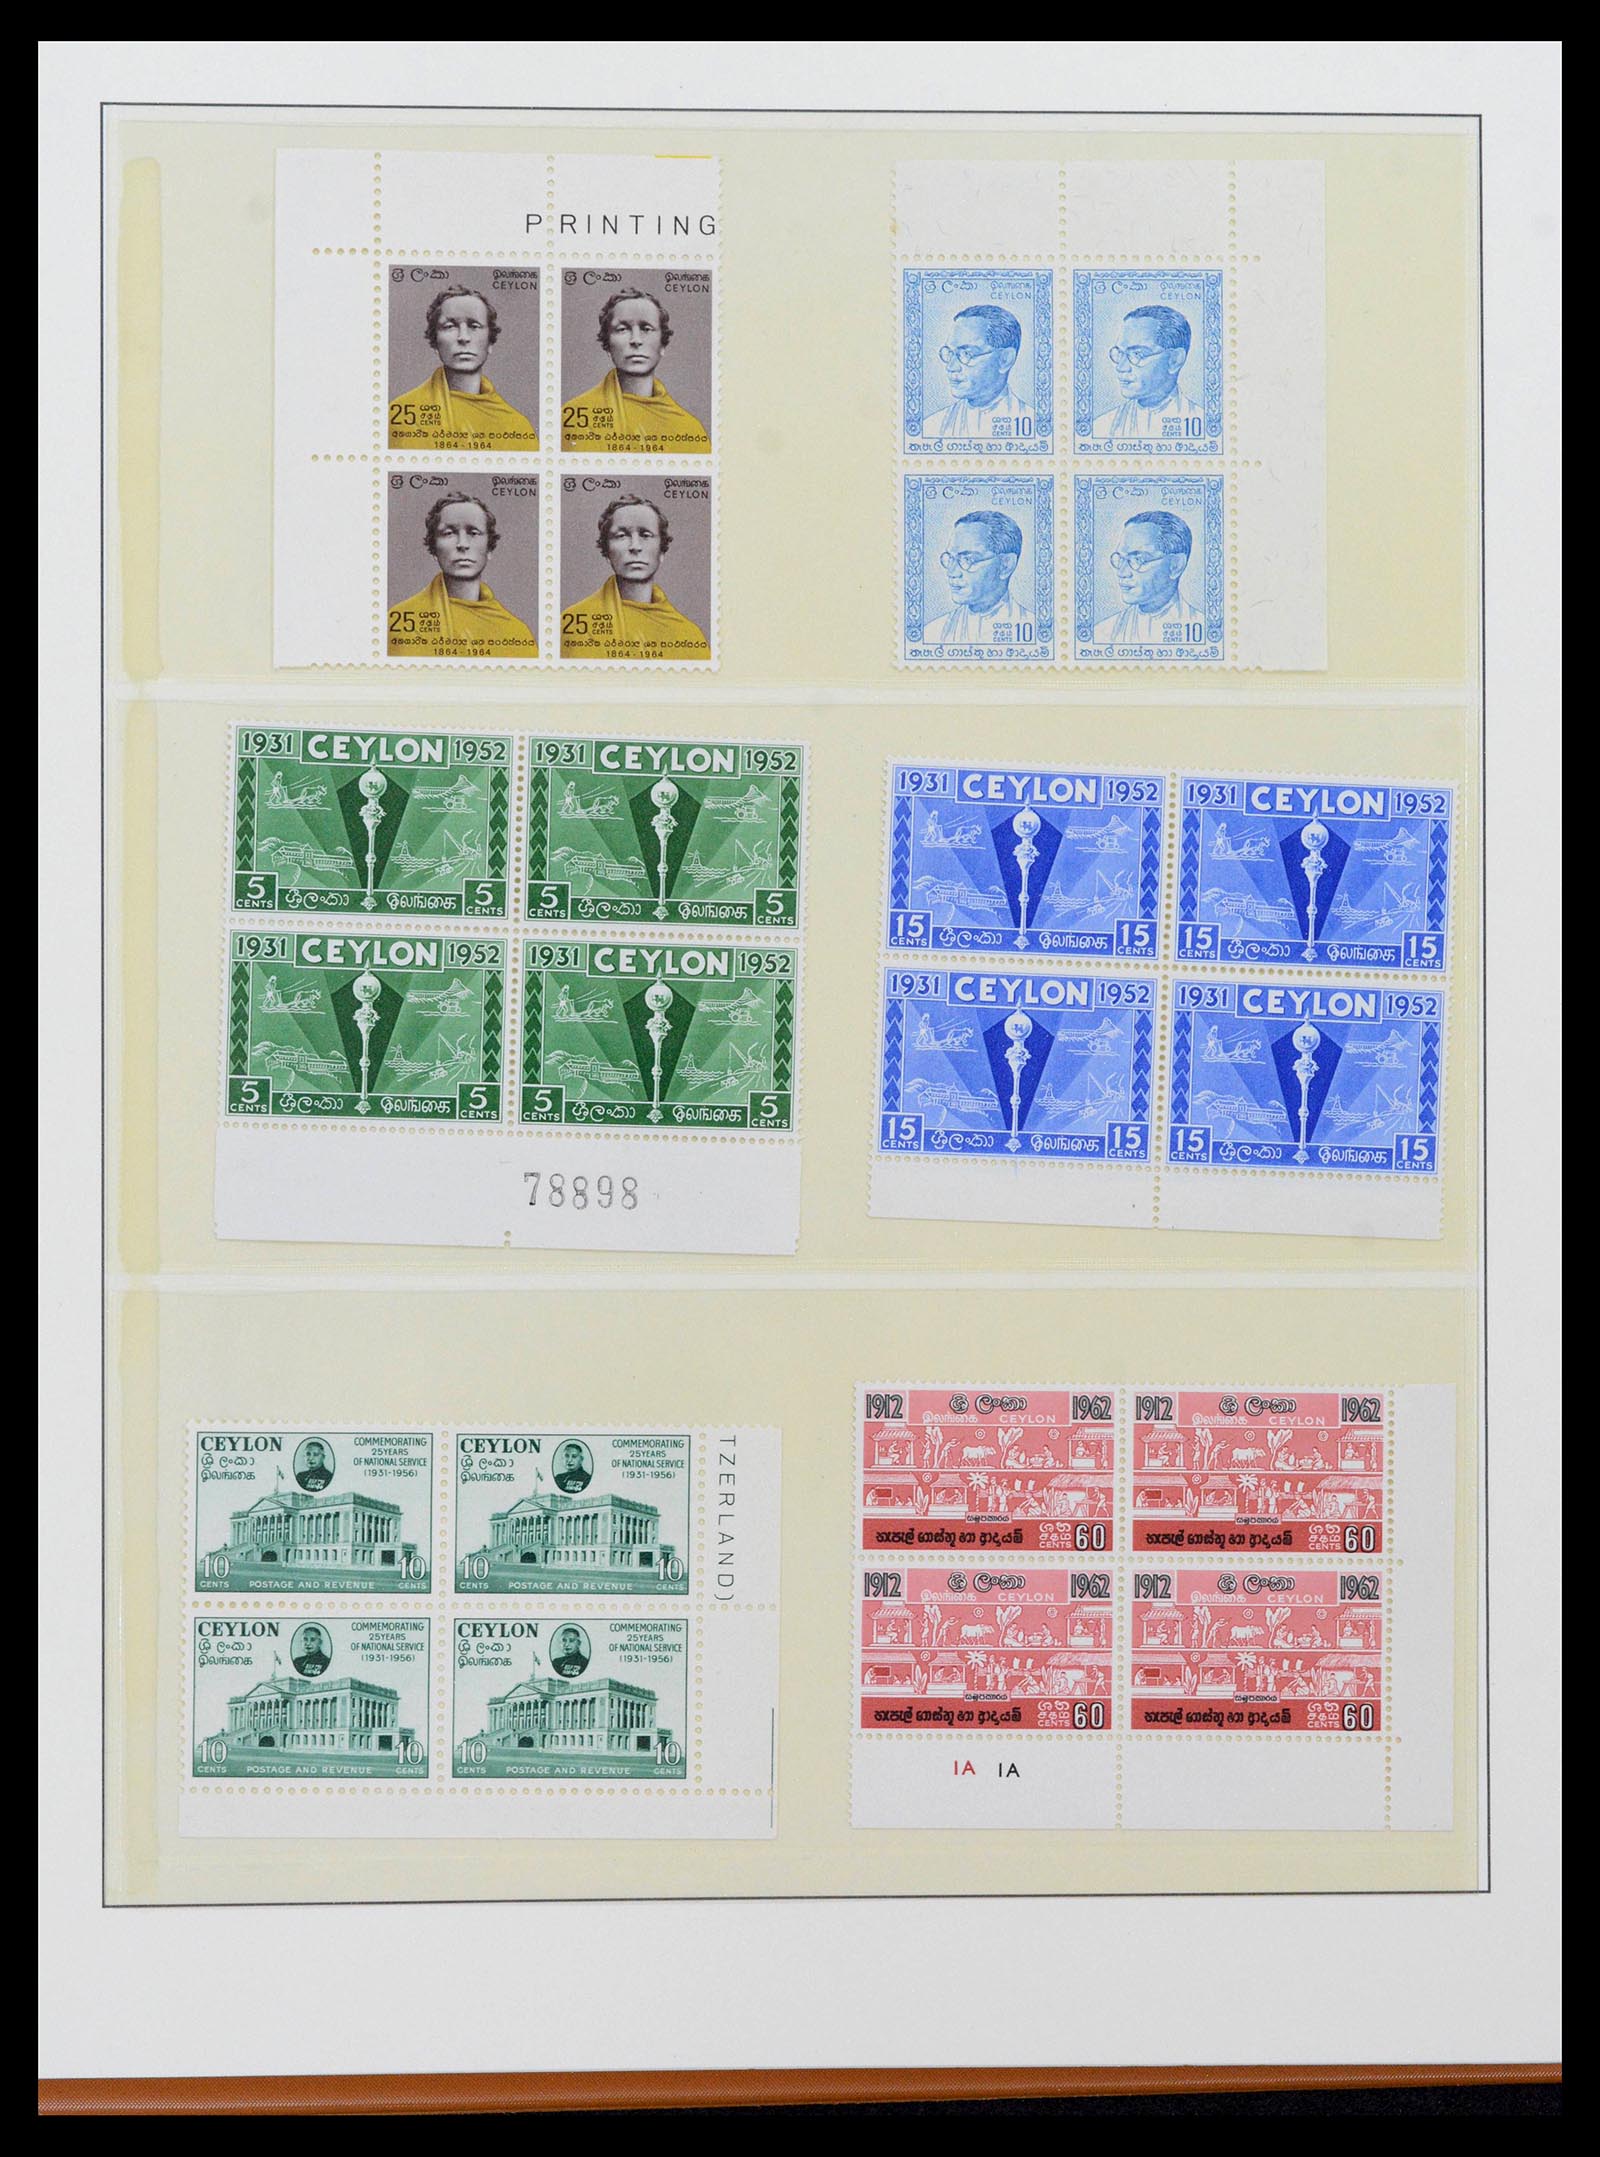 39003 0021 - Stamp collection 39003 Ceylon/Sri Lanka 1857-2003.